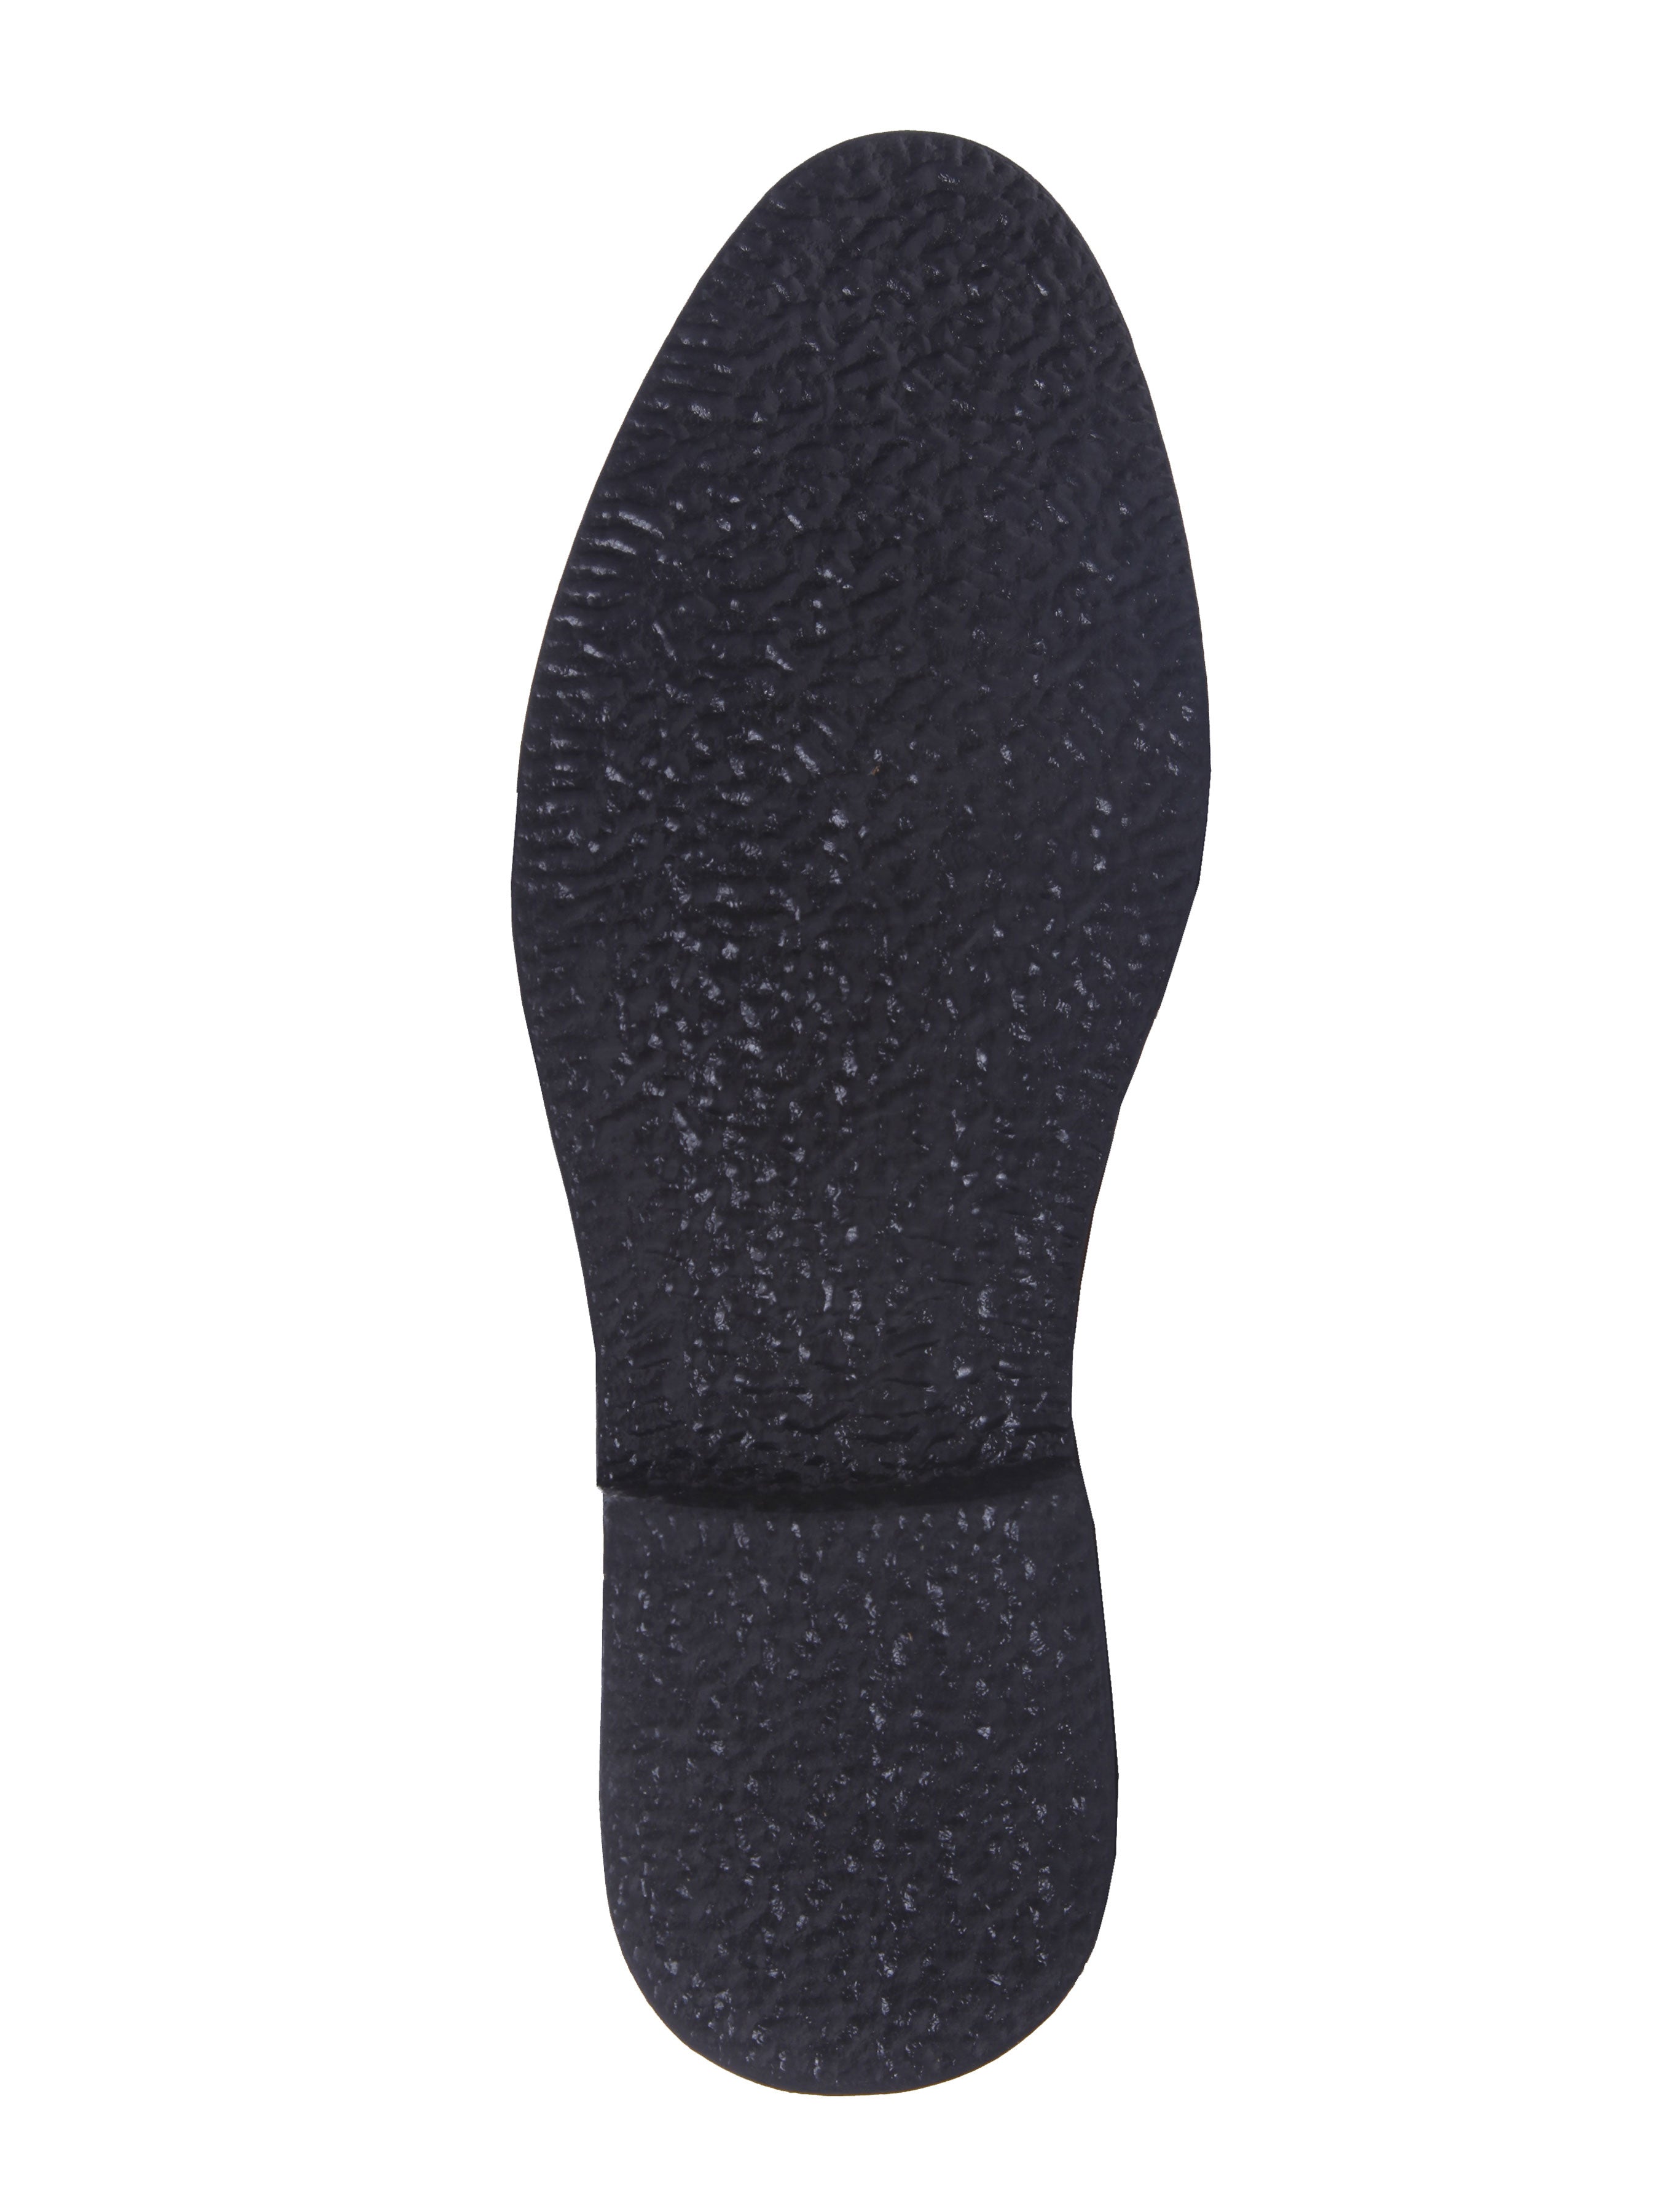 Wayne Penny Loafer - Solid Black Leather (Crepe Sole) | Zeve Shoes